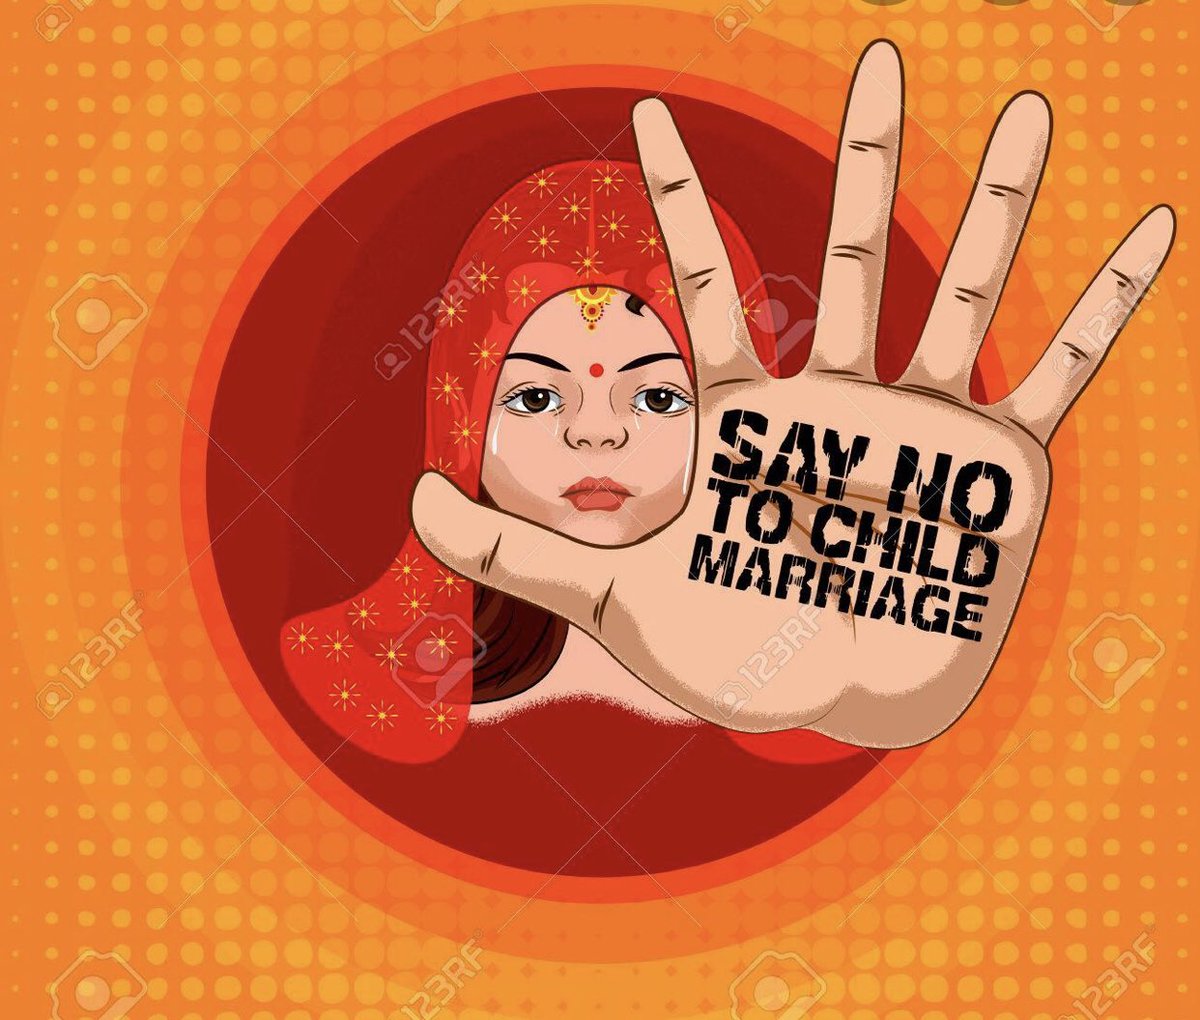 Say no child marriage# 
#IAmAUYV2021 #AUYVCGoesVirtual #1mBy2021